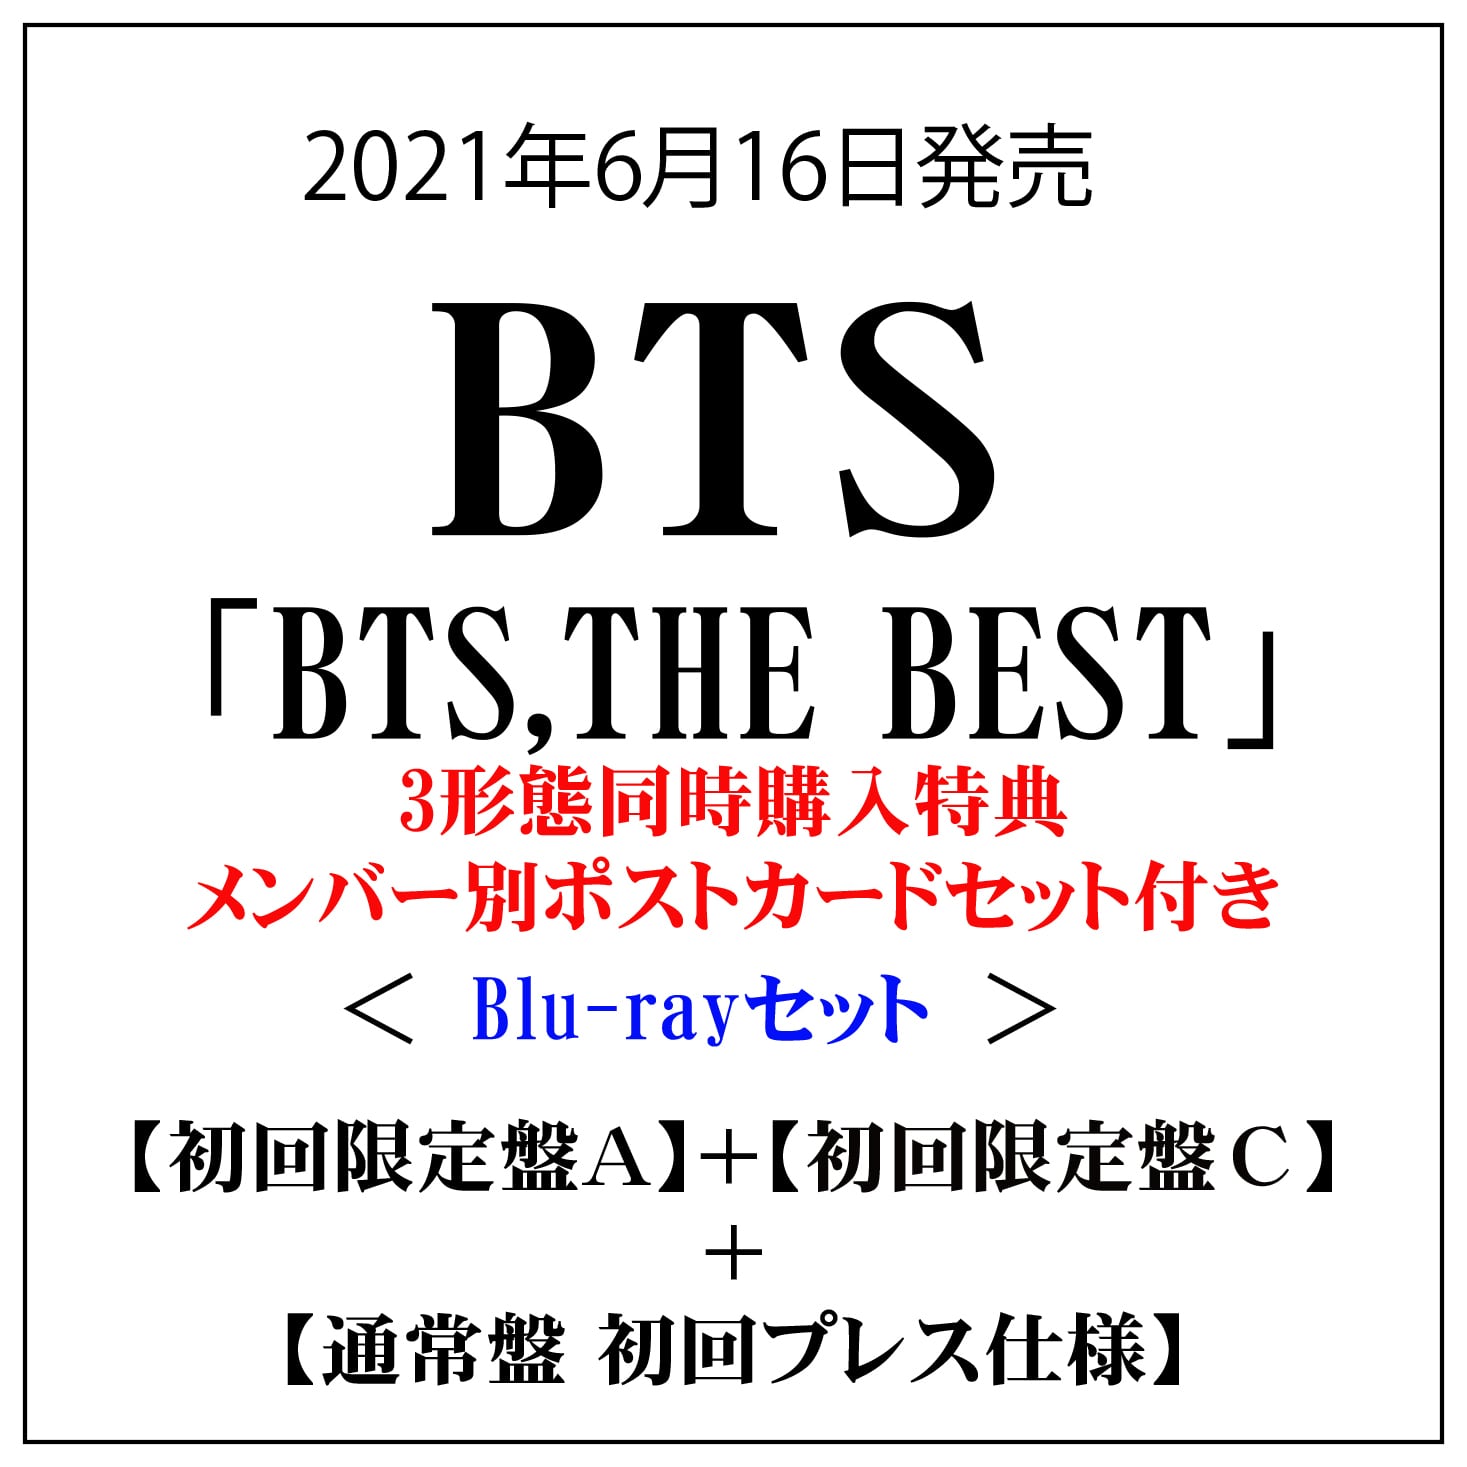 BTS, THE BEST (Blu-rayセット:初回限定盤A(2CD+1Blu-ray)+初回限定盤C+通常盤) プラザハマダ  栃木県足利市のアナログ盤・CD・雑貨オンラインショップ